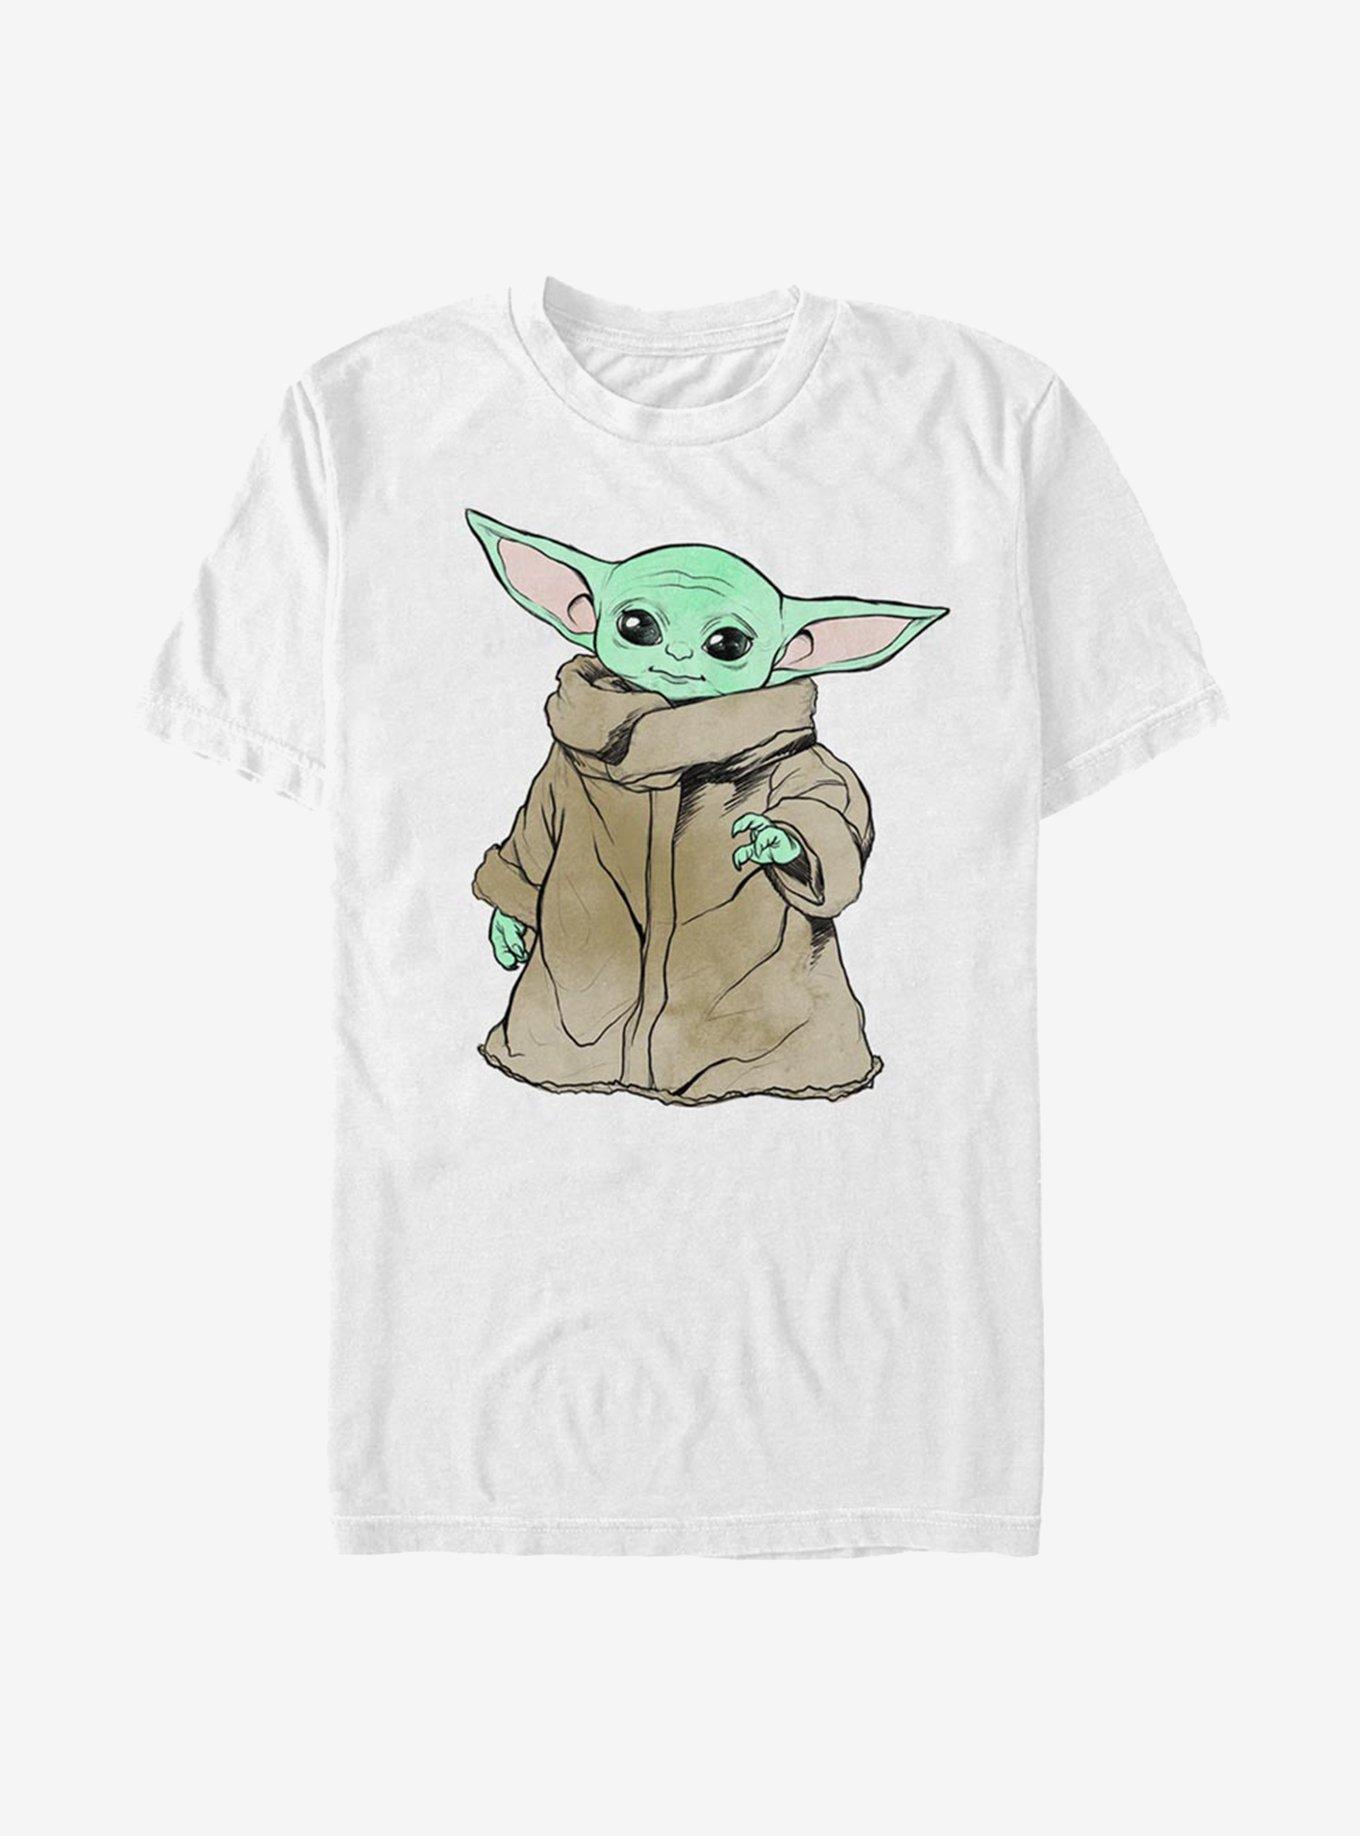 Star Wars The Mandalorian Sketch Child T-Shirt